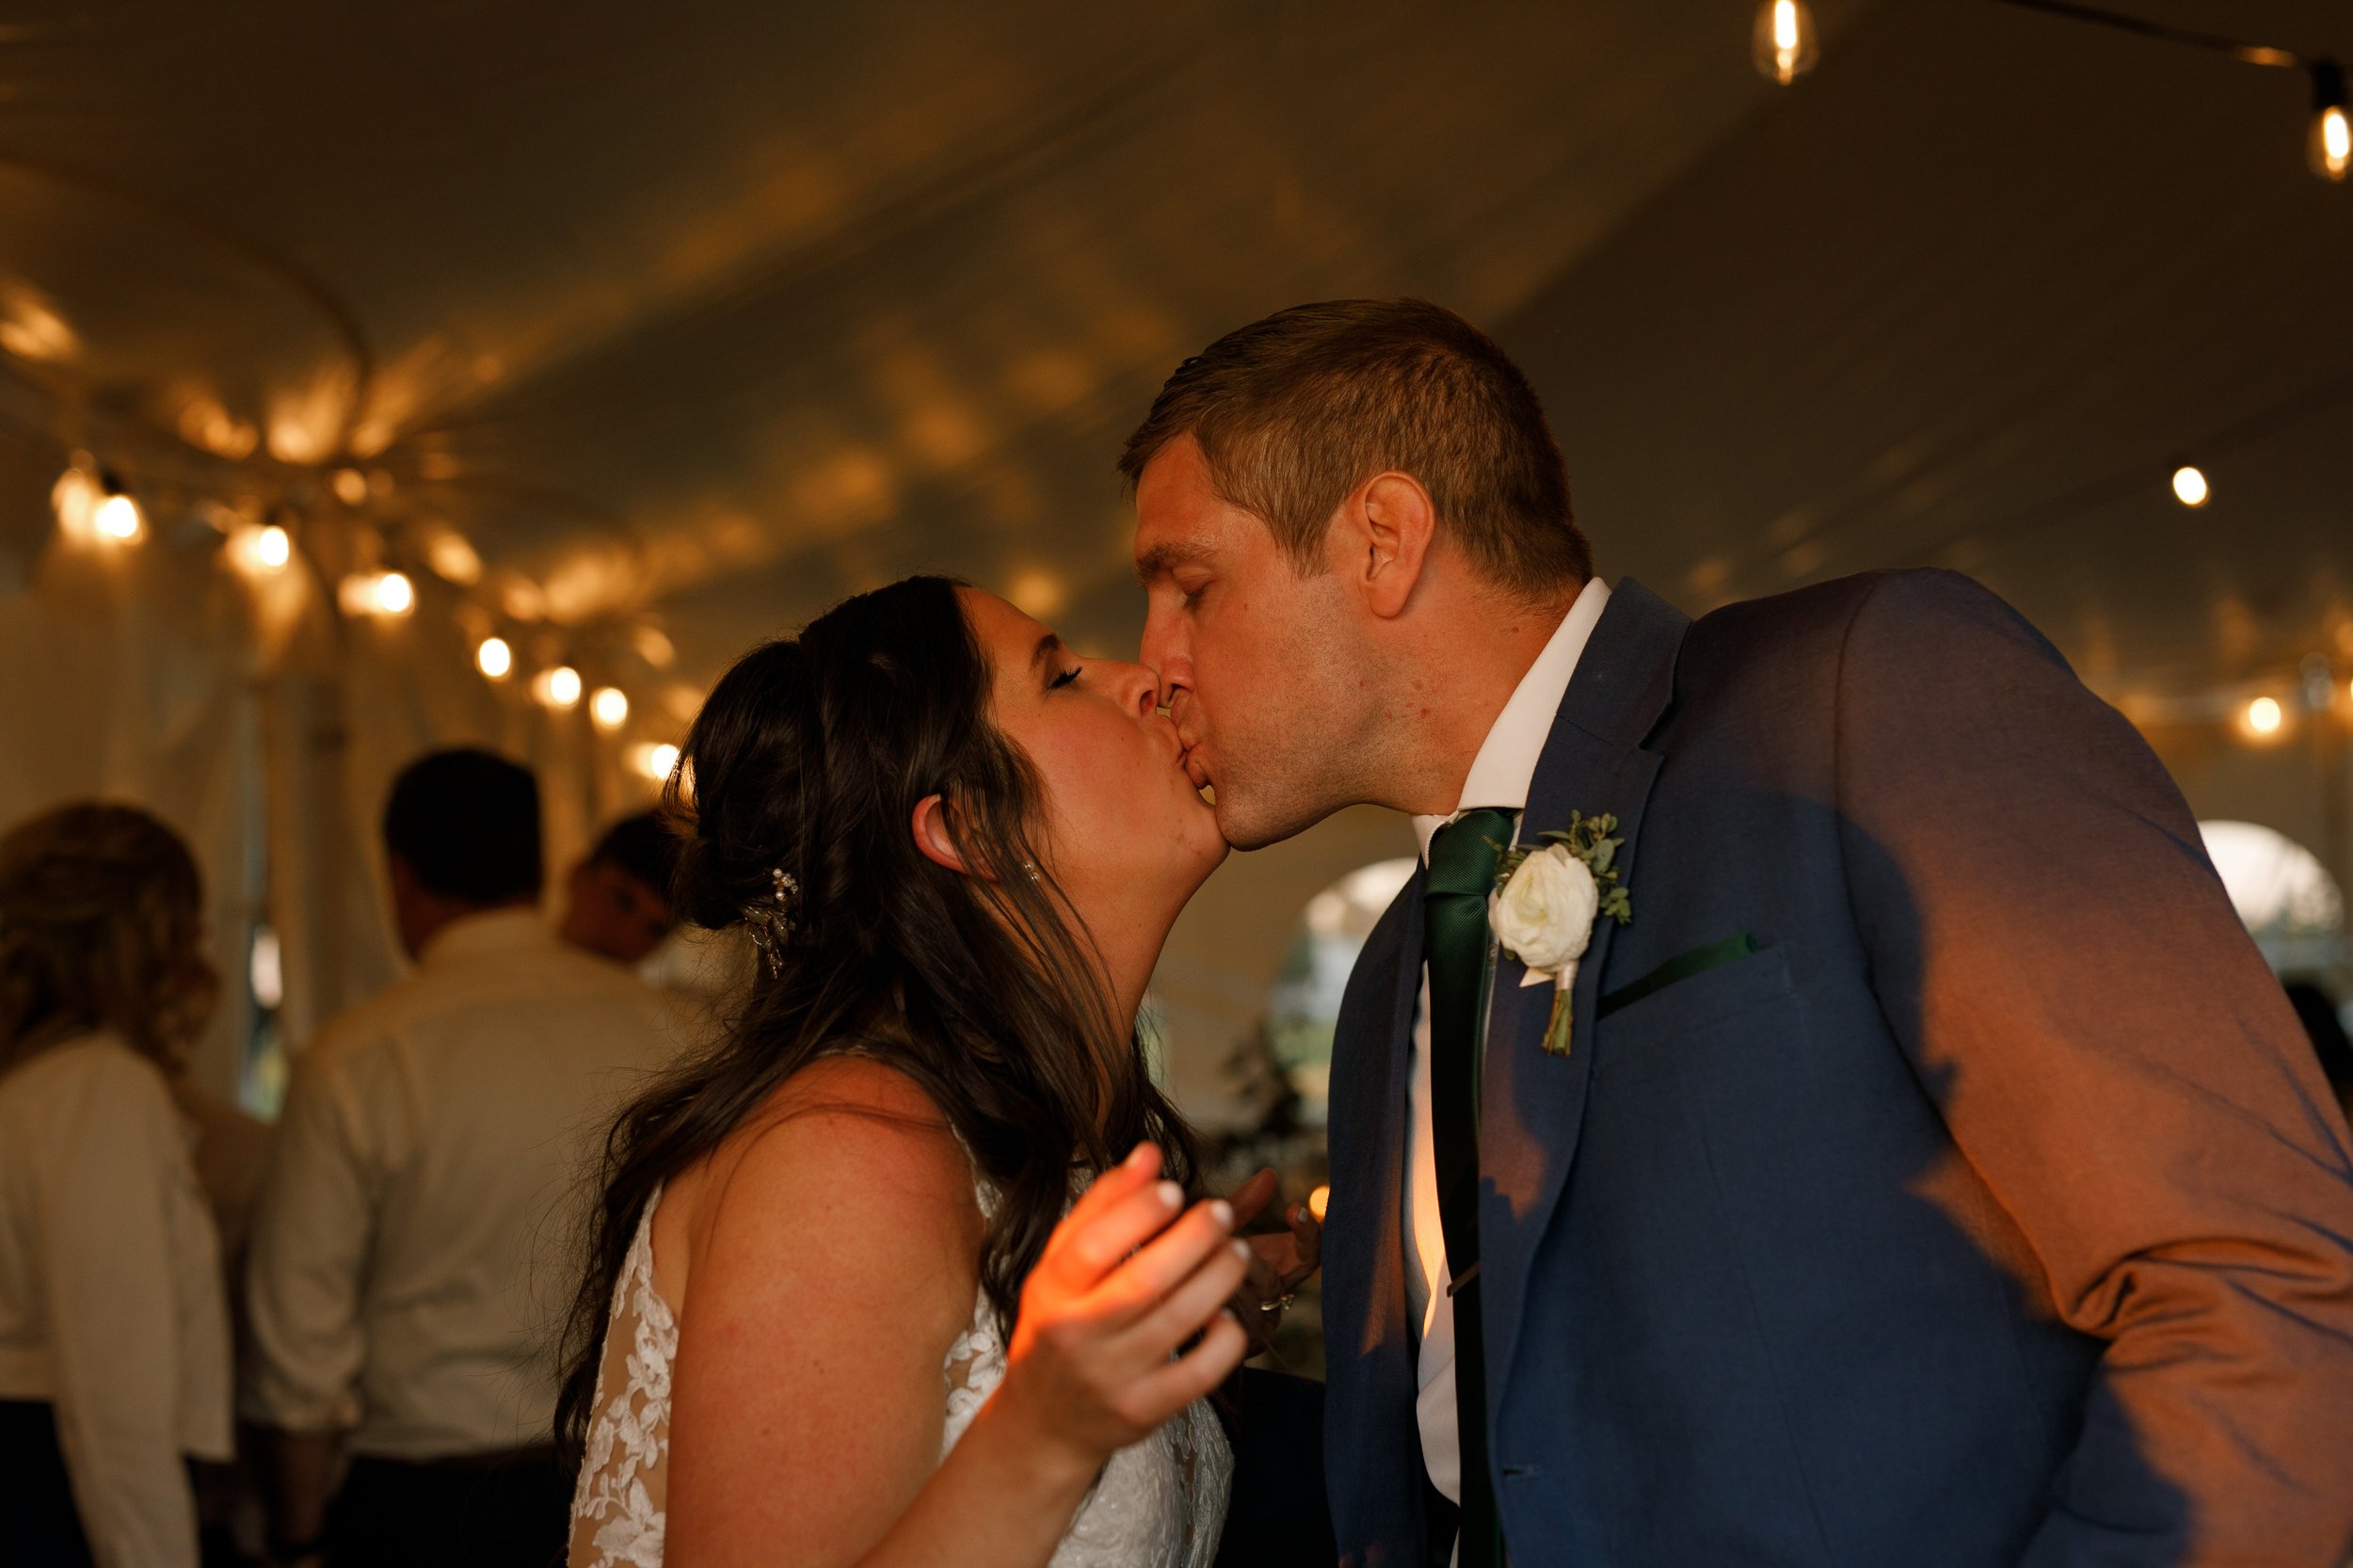 Sparta Wedding Photographer - Grand Rapids Wedding Photographer - Backyard Wedding - Jessica Darling - Ang and Kyle Wedding - J Darling Photo176.jpg